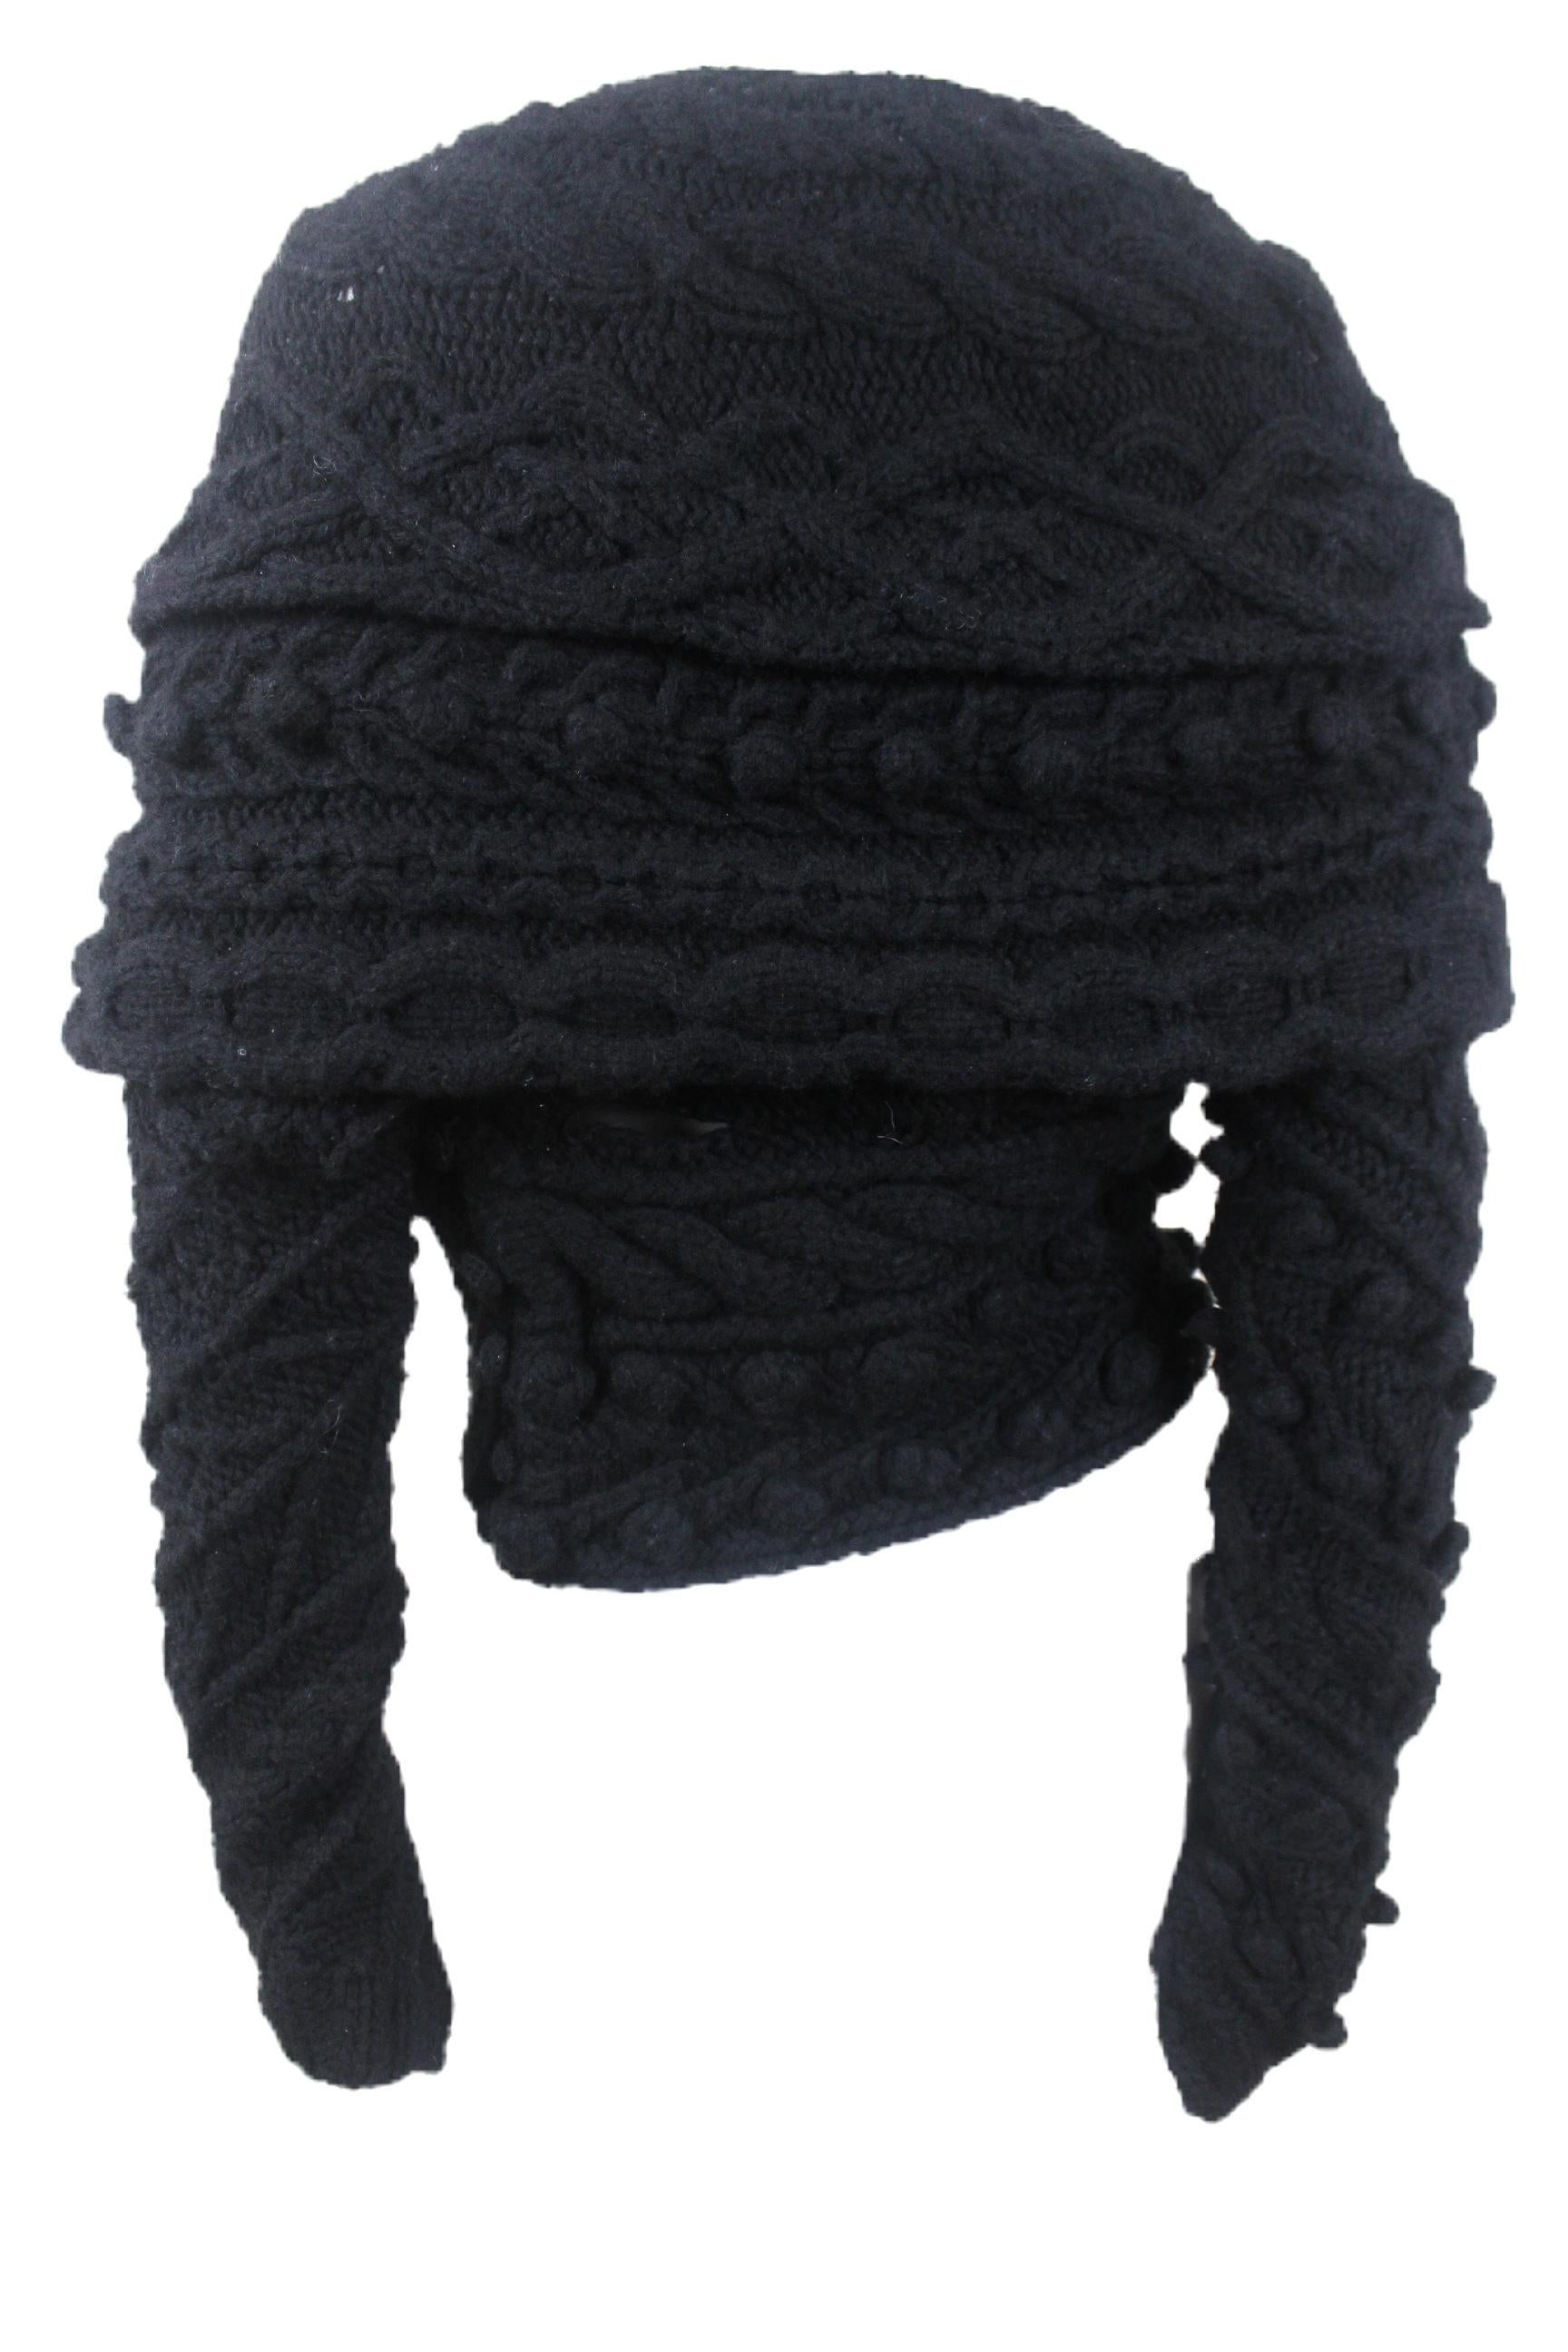 Tao Comme des Garcons
2008 Collection
Aran Cable Knit
No Size